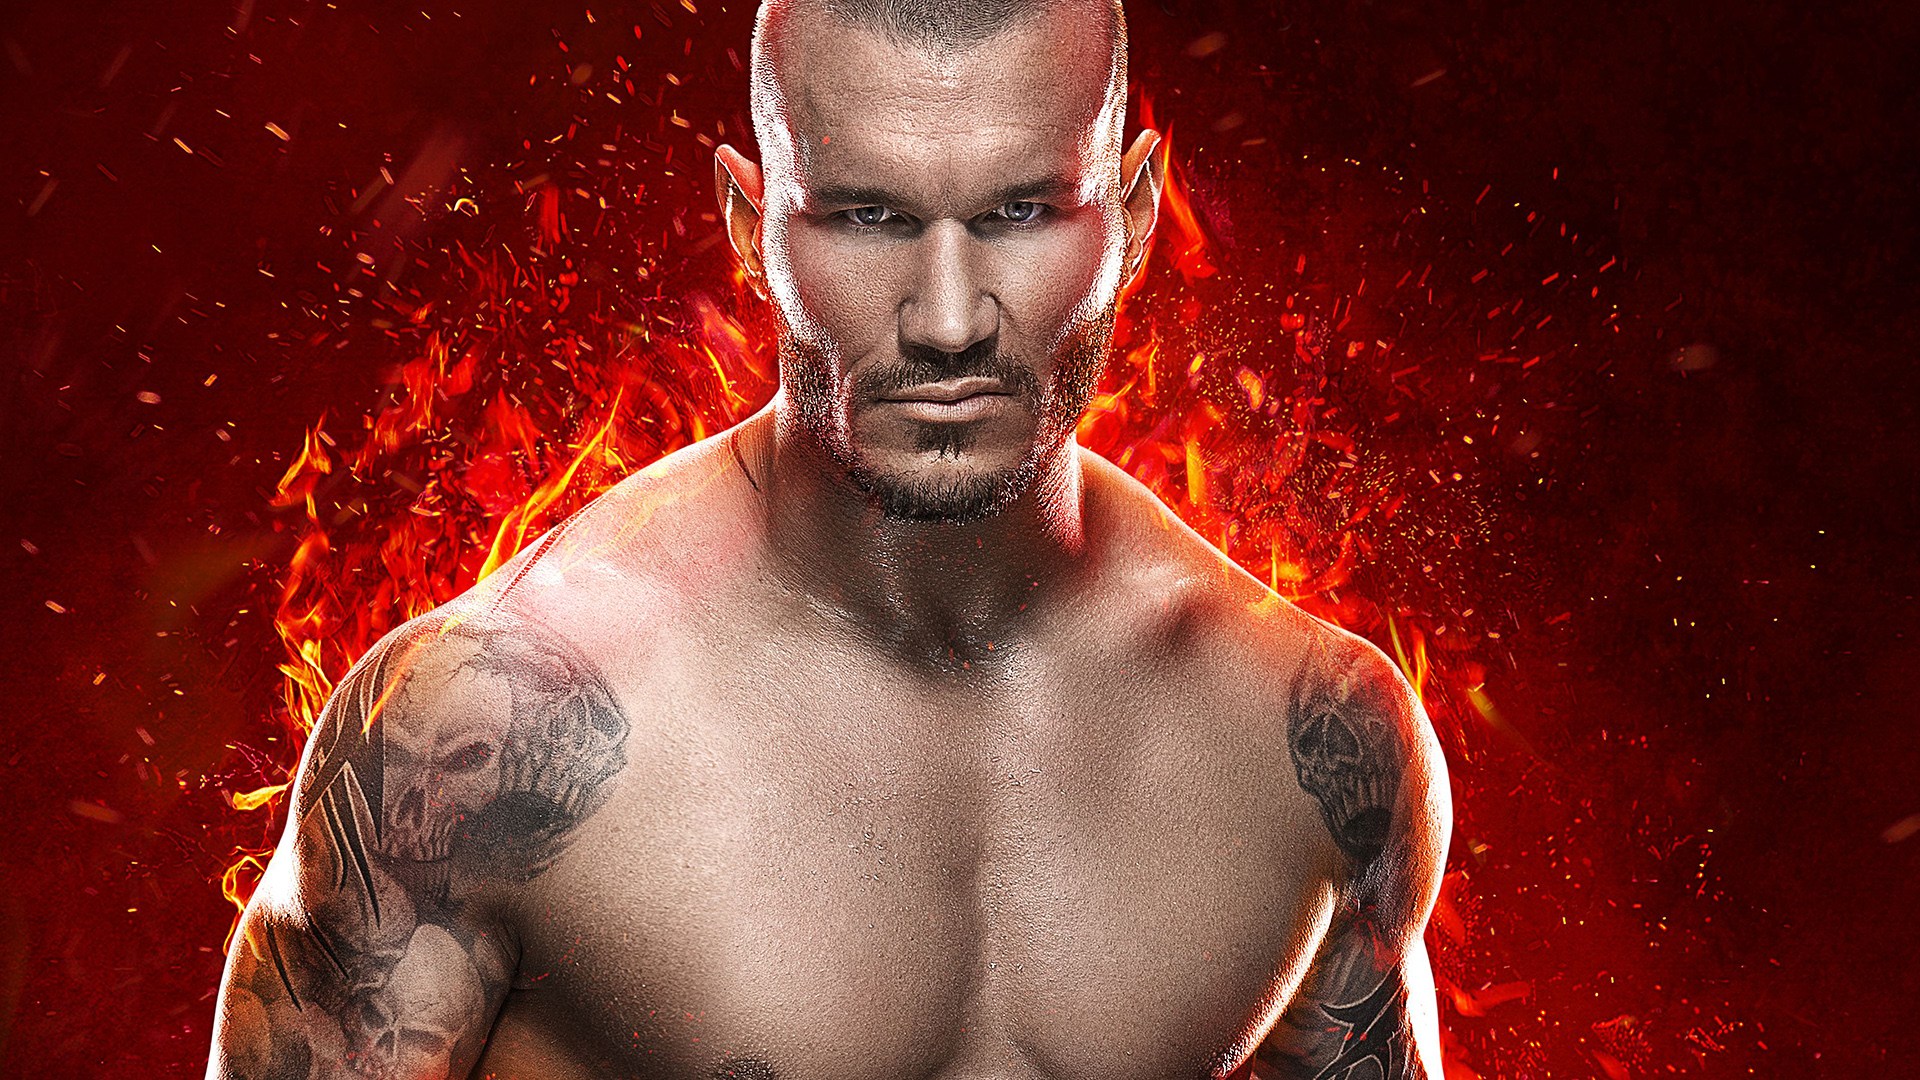 Randy Orton 1080p Hd Wallpaper Background - Wwe Randy Orton Image 2015 , HD Wallpaper & Backgrounds